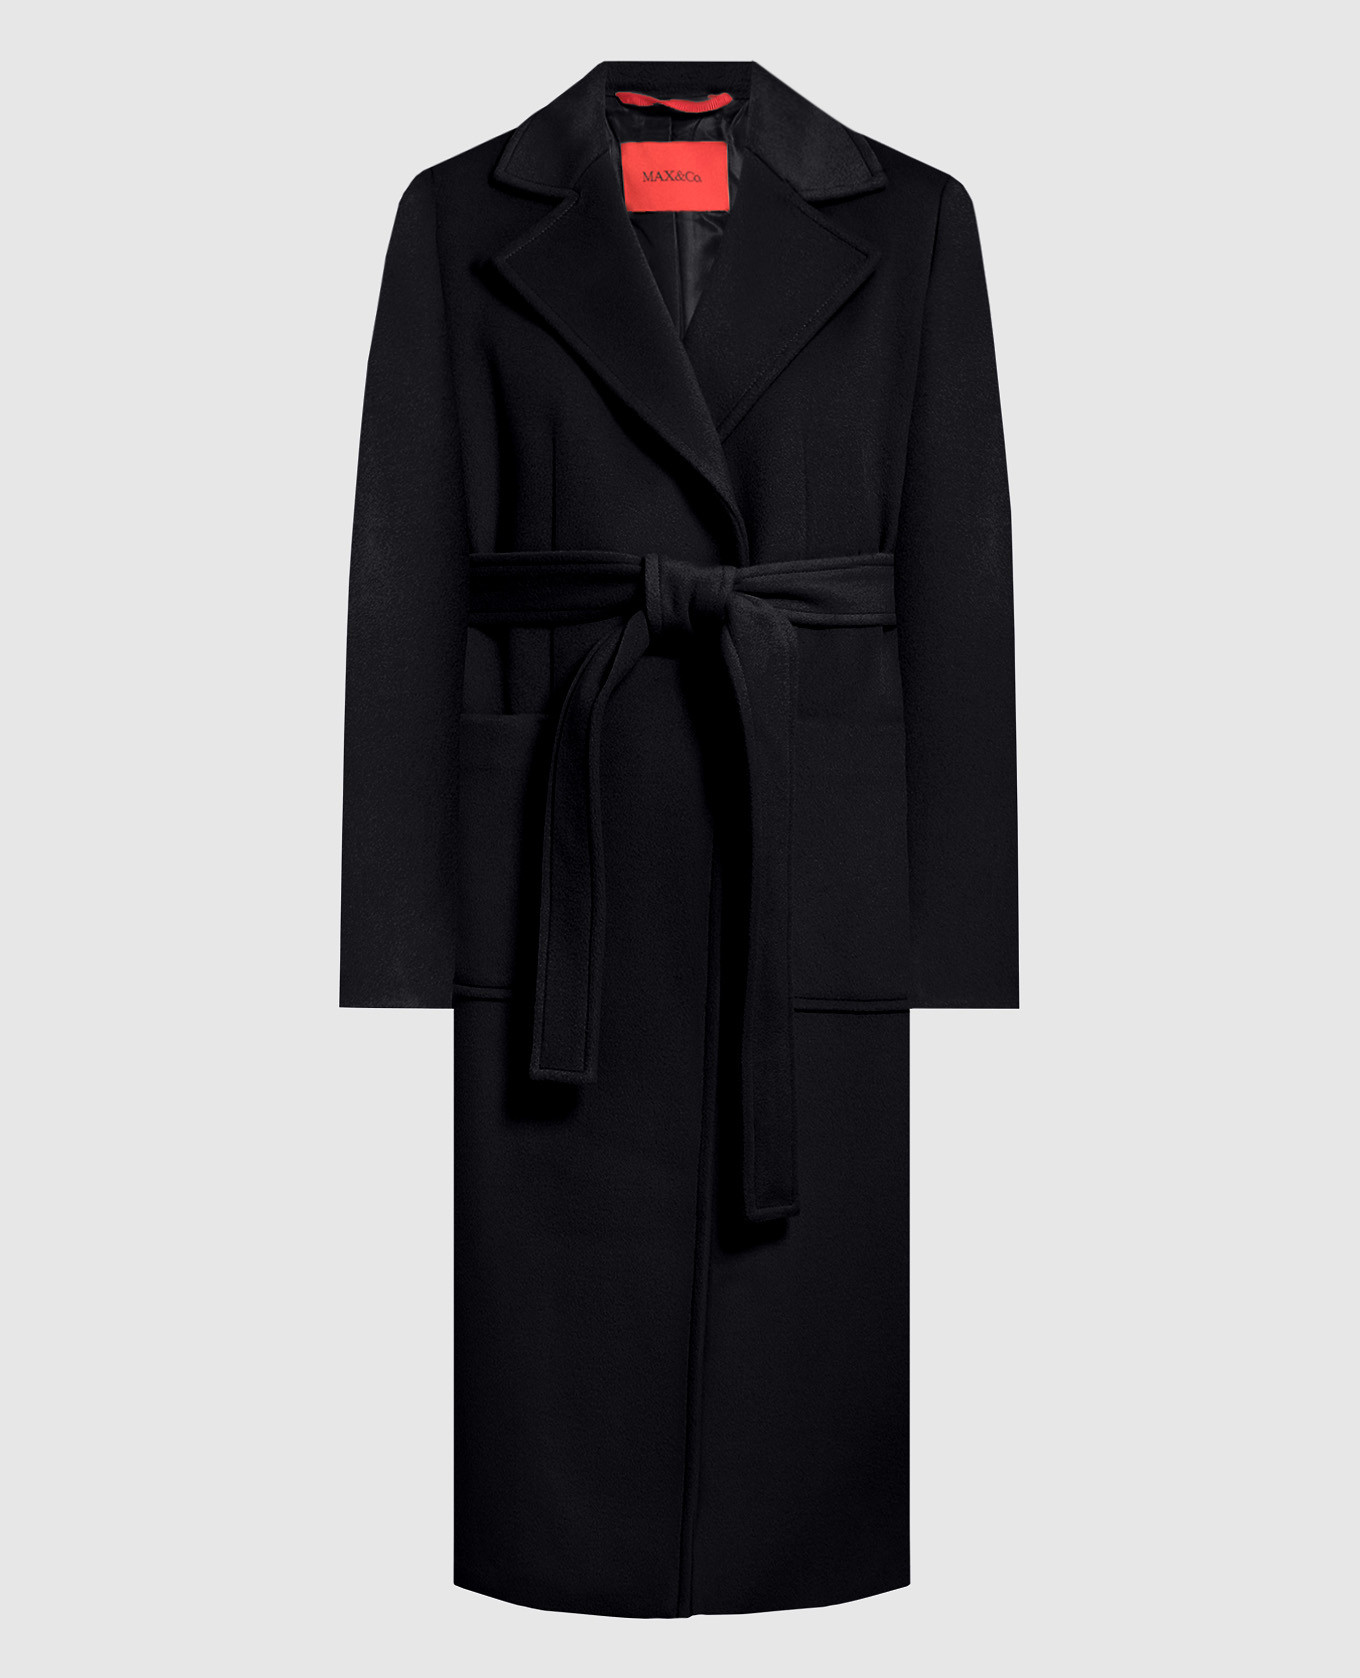 Black coat made of wool